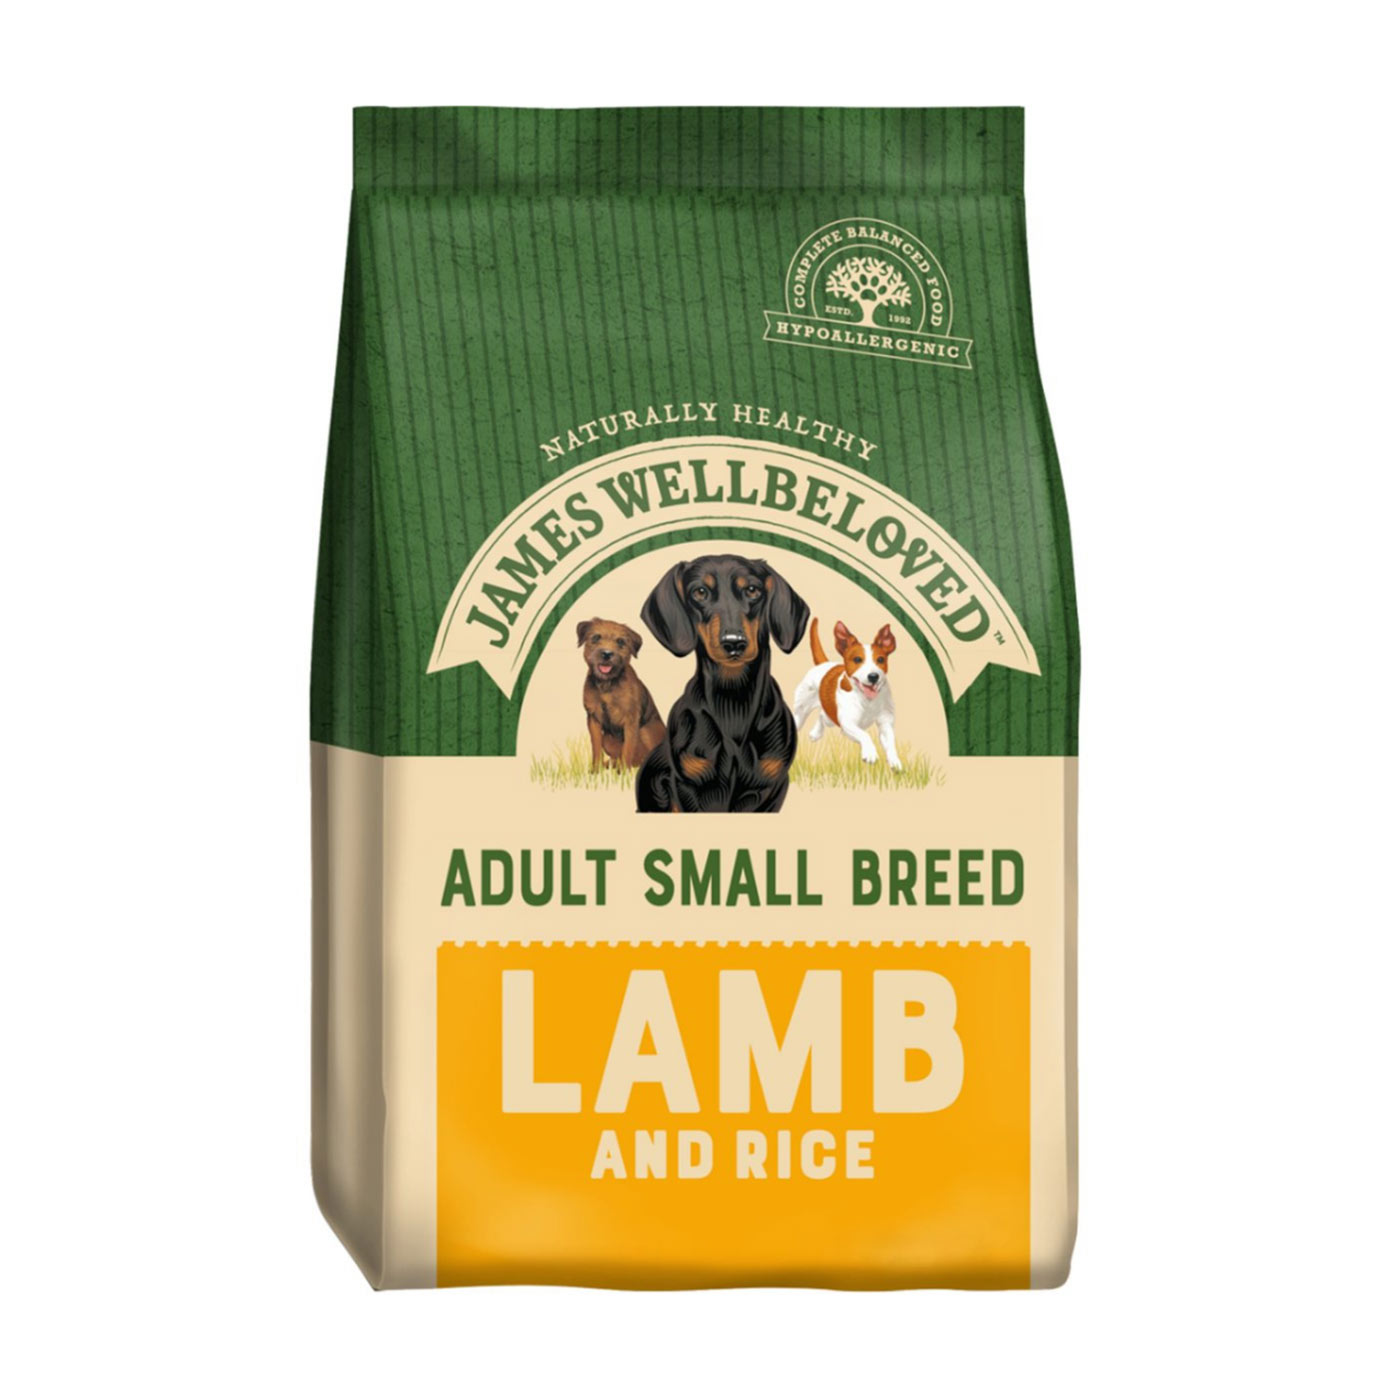 James Wellbeloved Lamb & Rice Adult Small Breed Dog Food